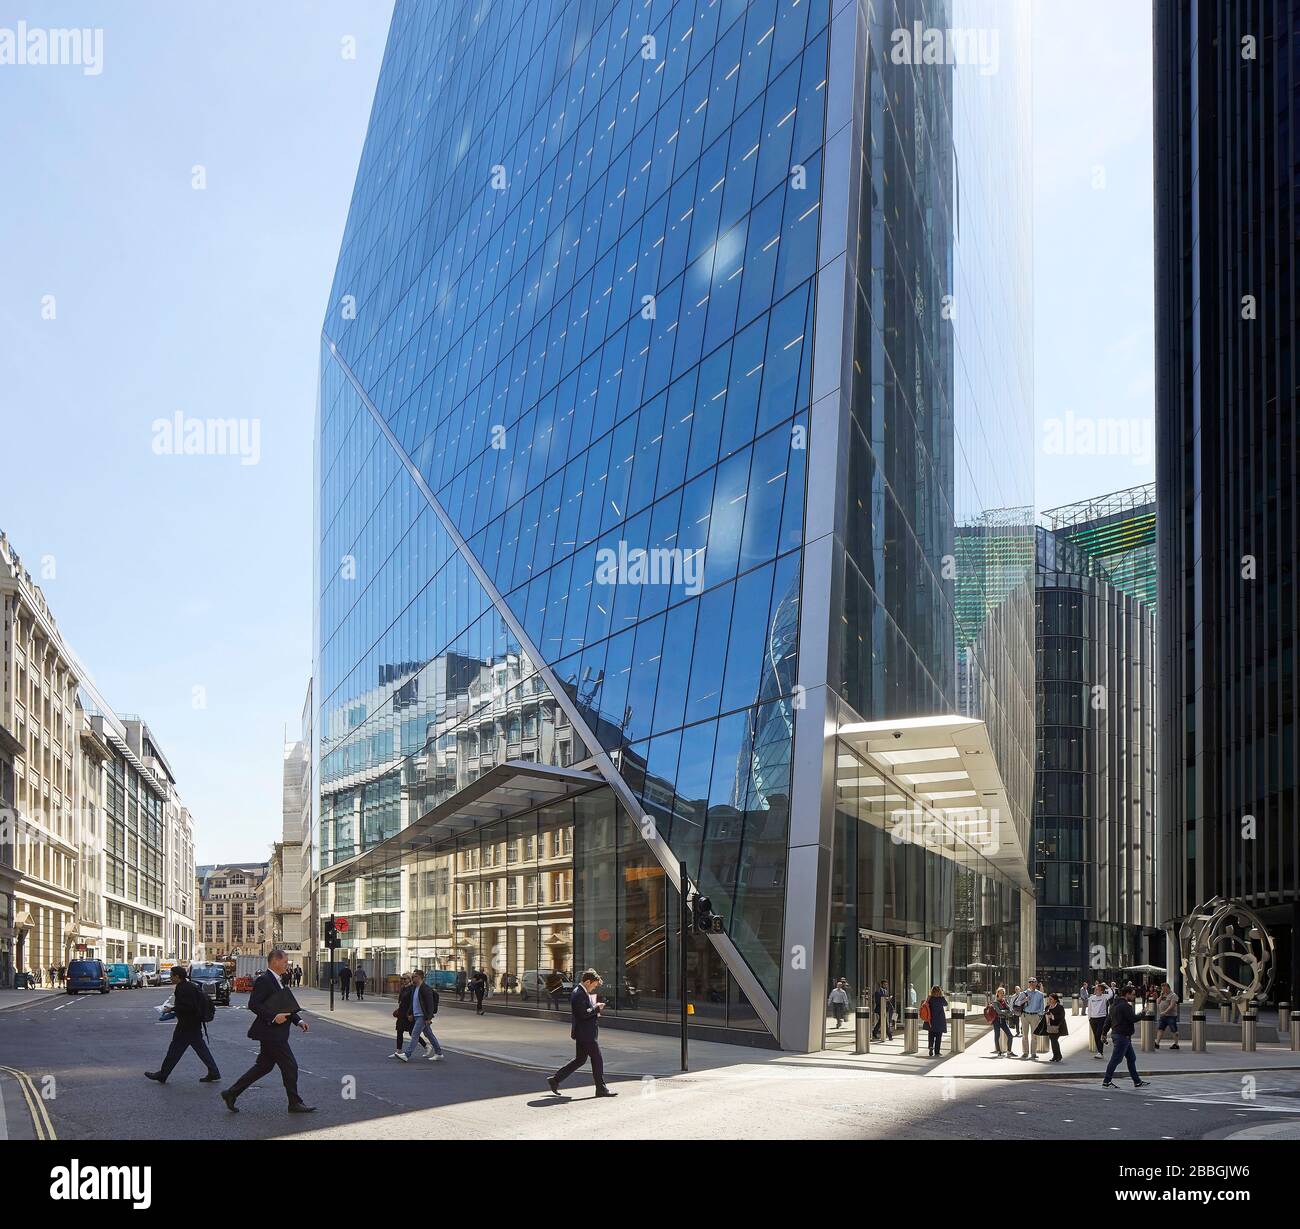 Spiegelung der Umrandungen in Glasfassade. 52 Lime Street - The Scalpel, London, Großbritannien. Architekt: Kohn Pedersen Fox Associates (KPF), 2018. Stockfoto